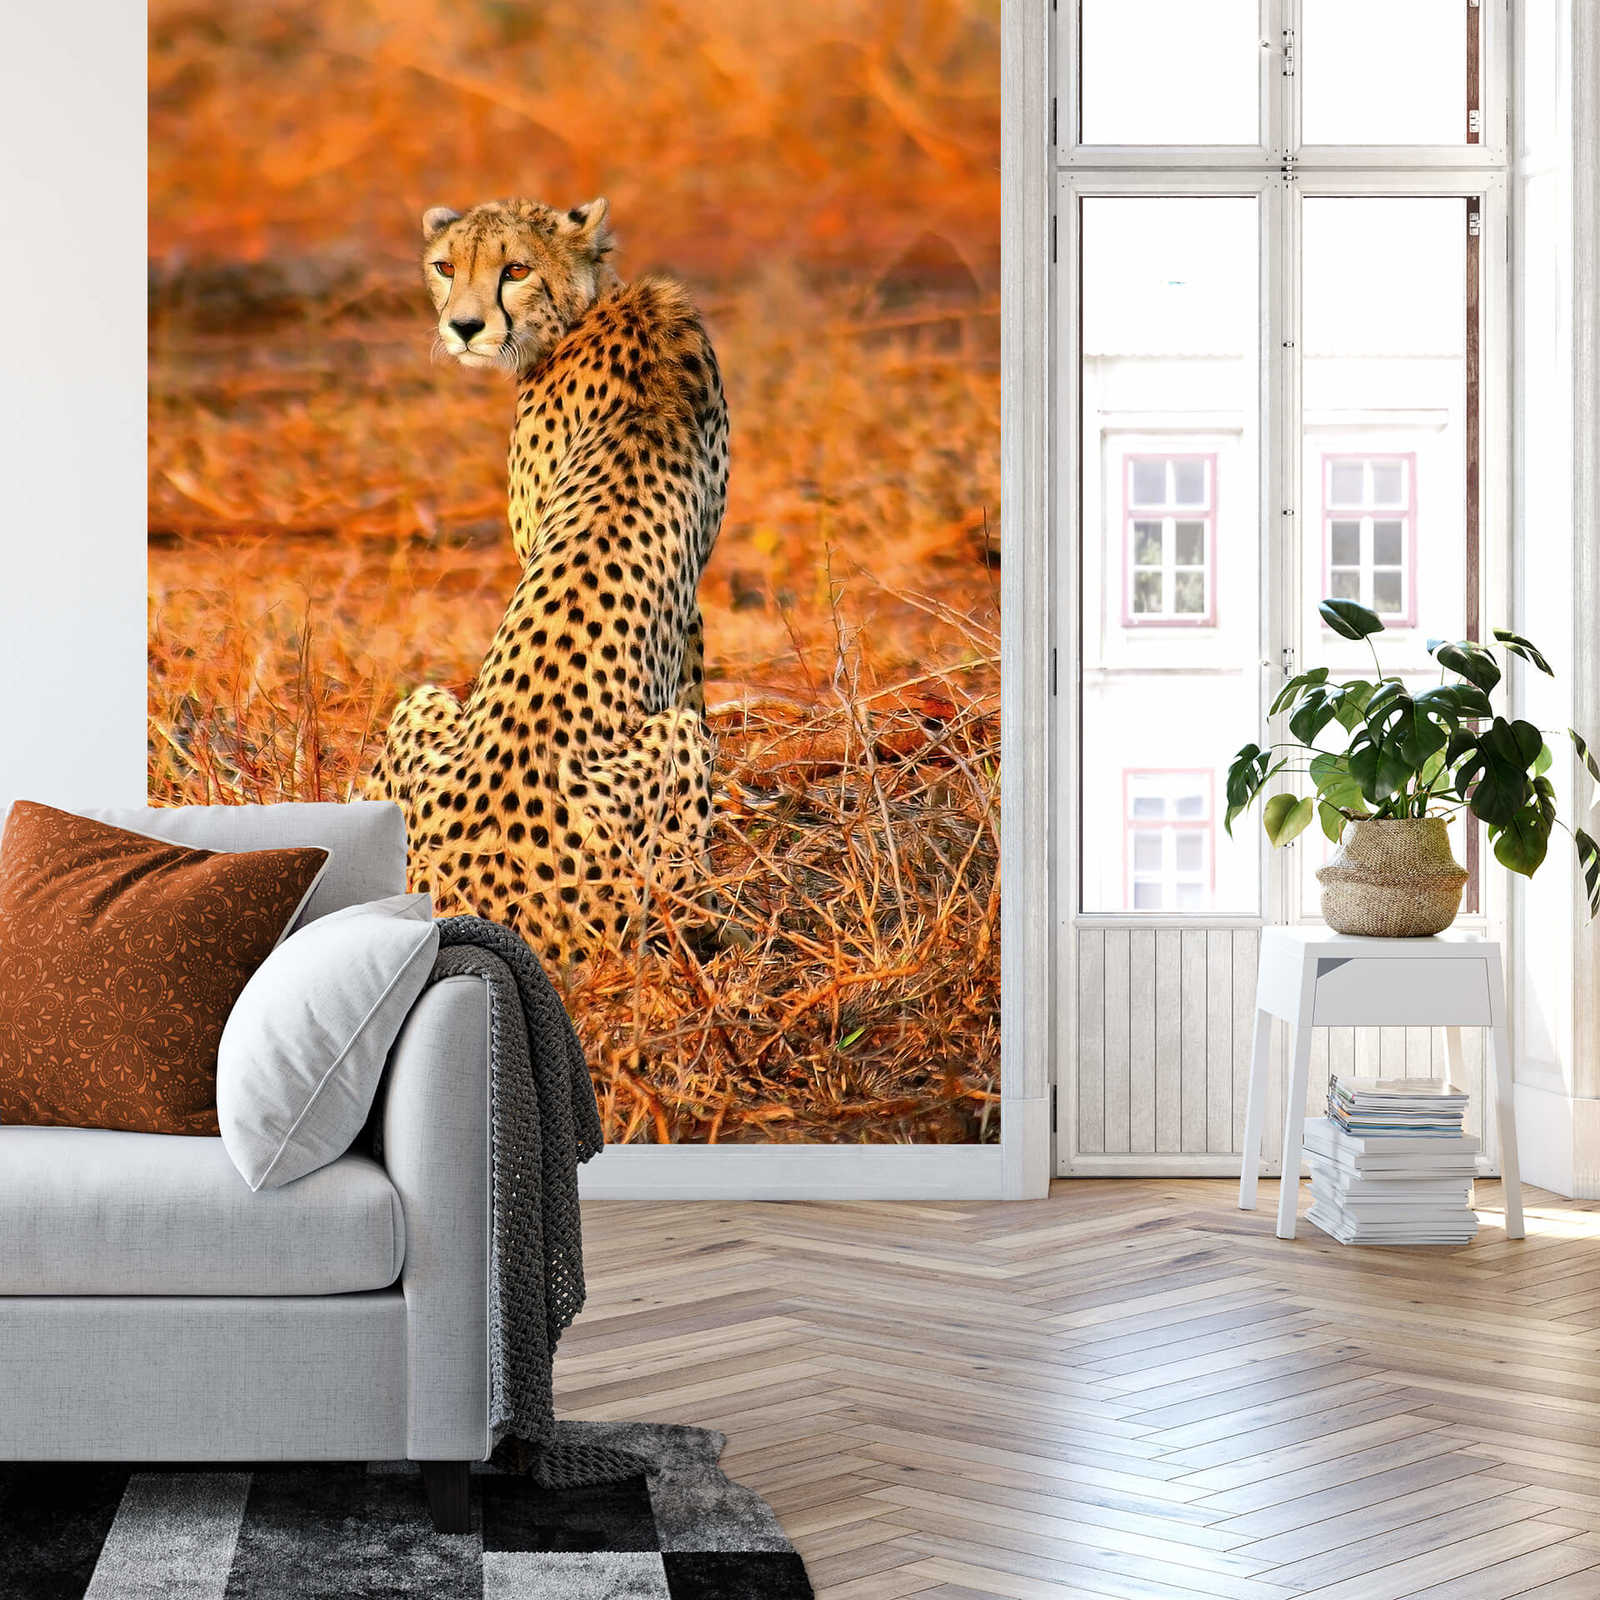             Papel pintado Safari Animal Leopardo - Amarillo, Naranja, Negro
        